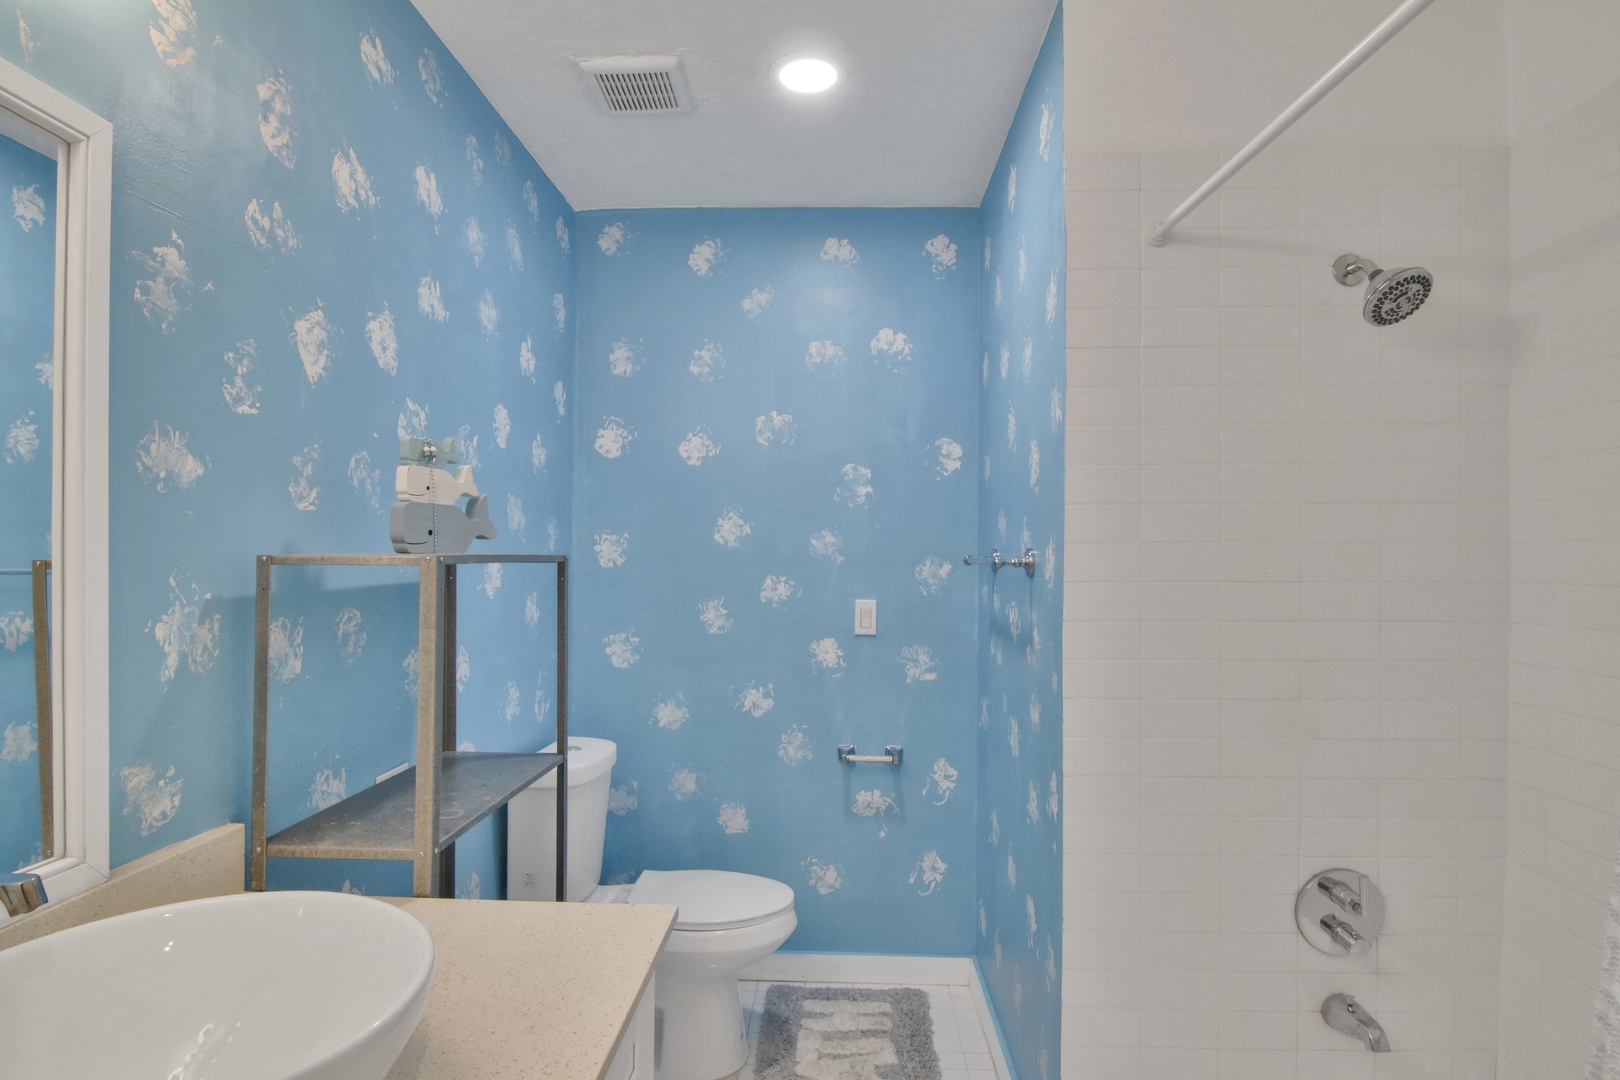 Unit 2: The ensuite bathroom includes a single vanity & shower/tub combo